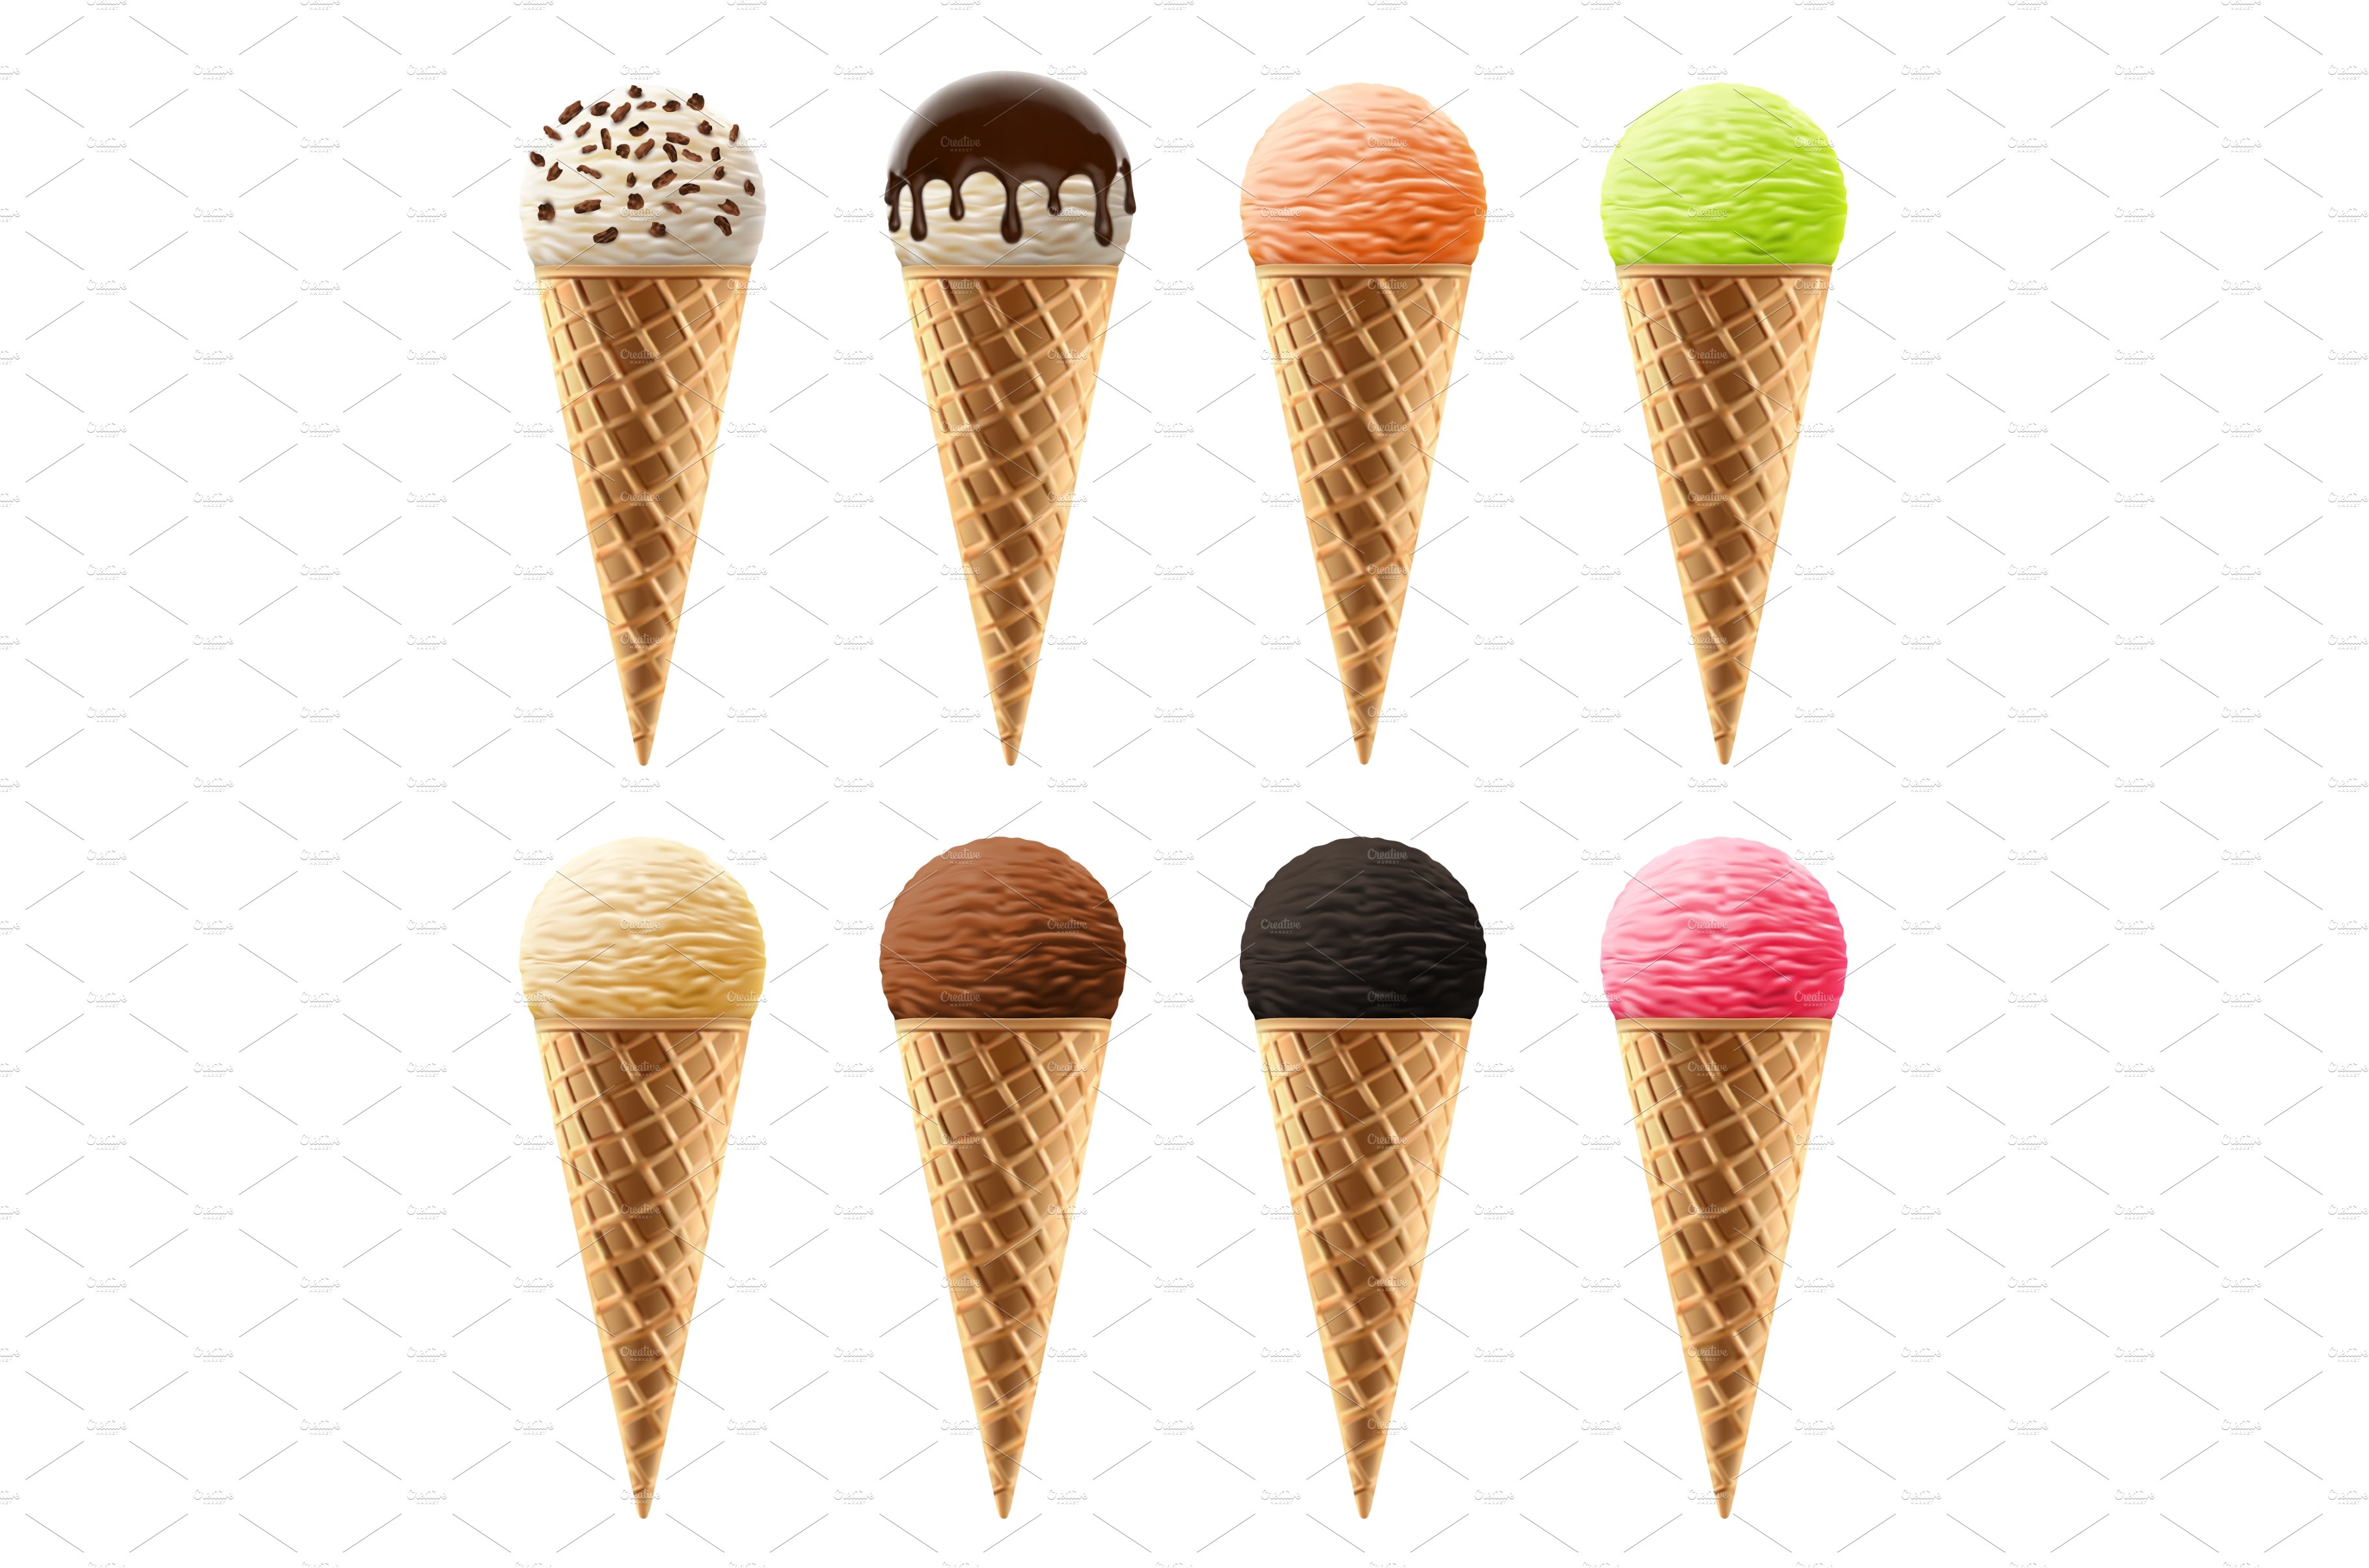 Ice cream in waffle cones cover image.